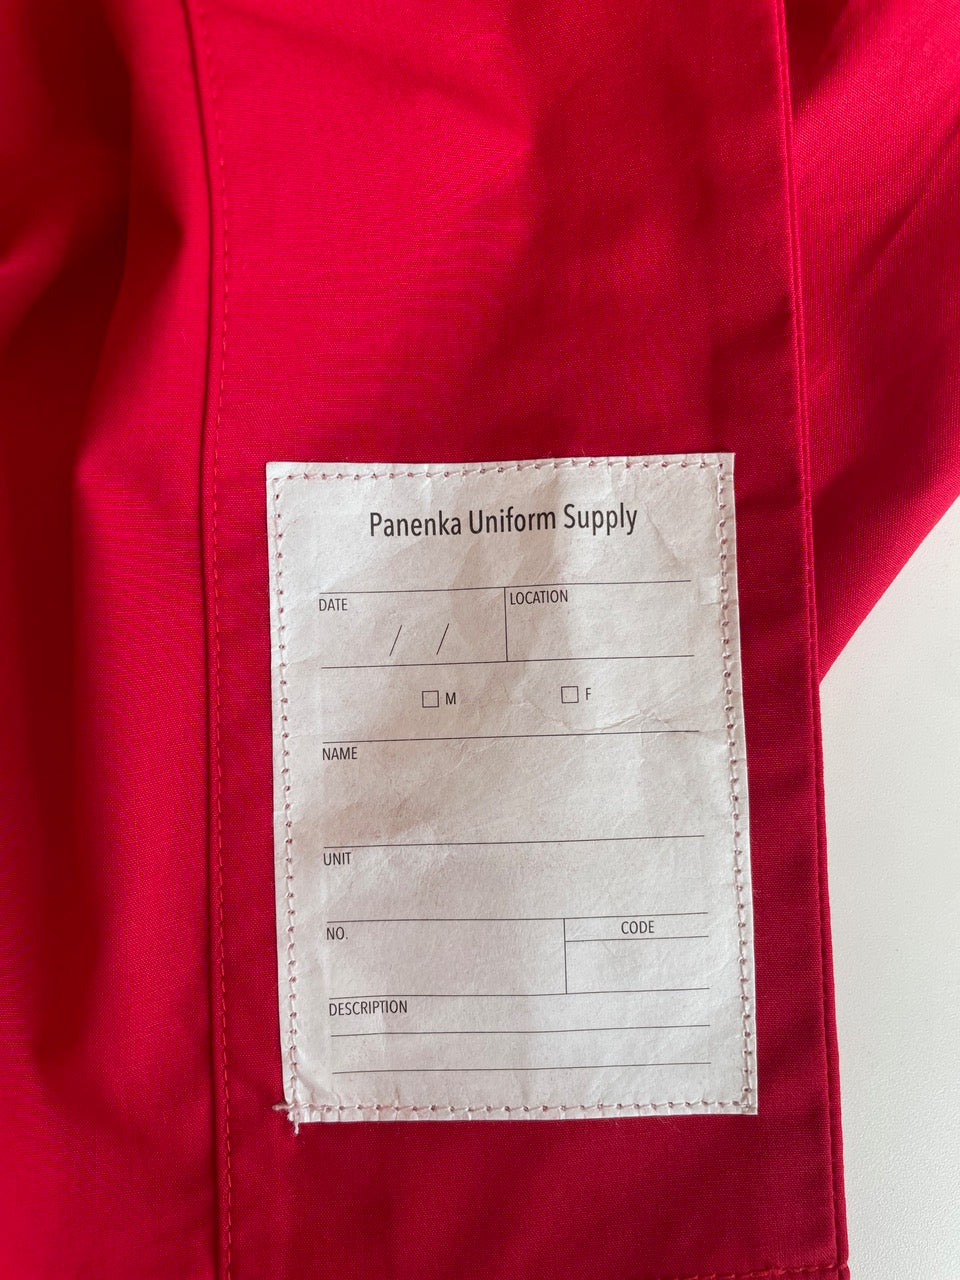 roroeyewear 赤衣 red coat